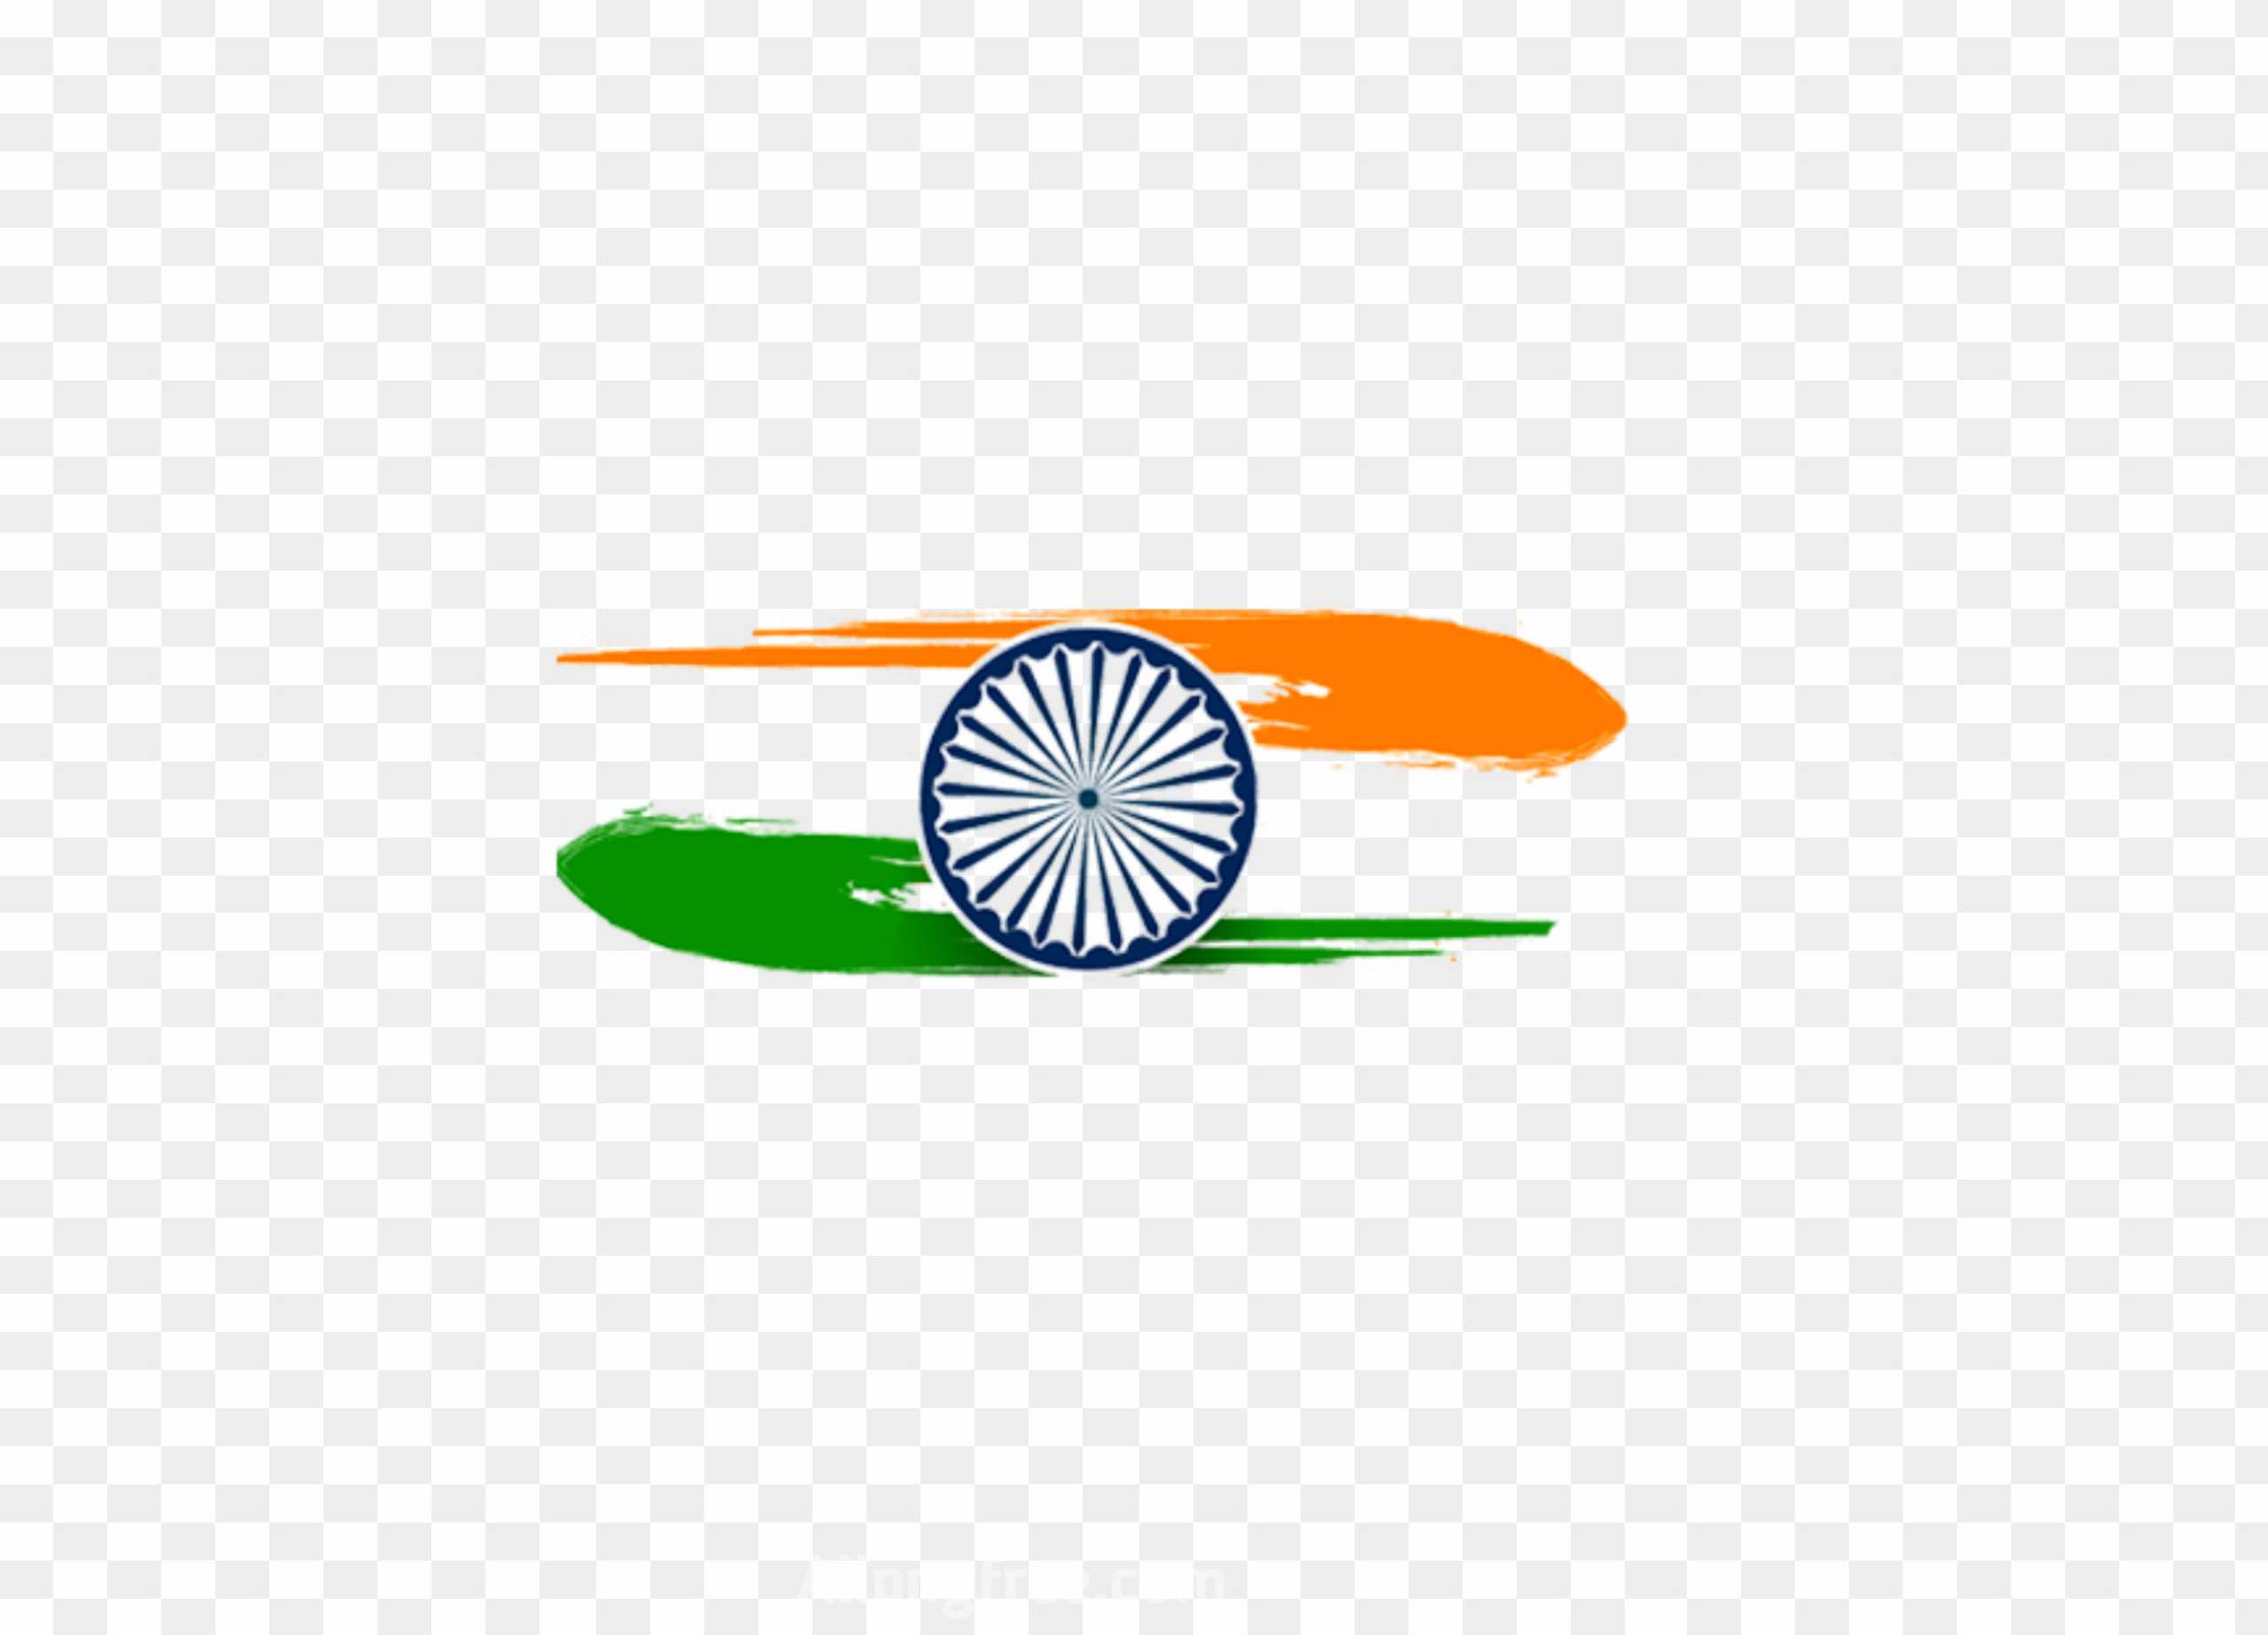 India flag logo png image